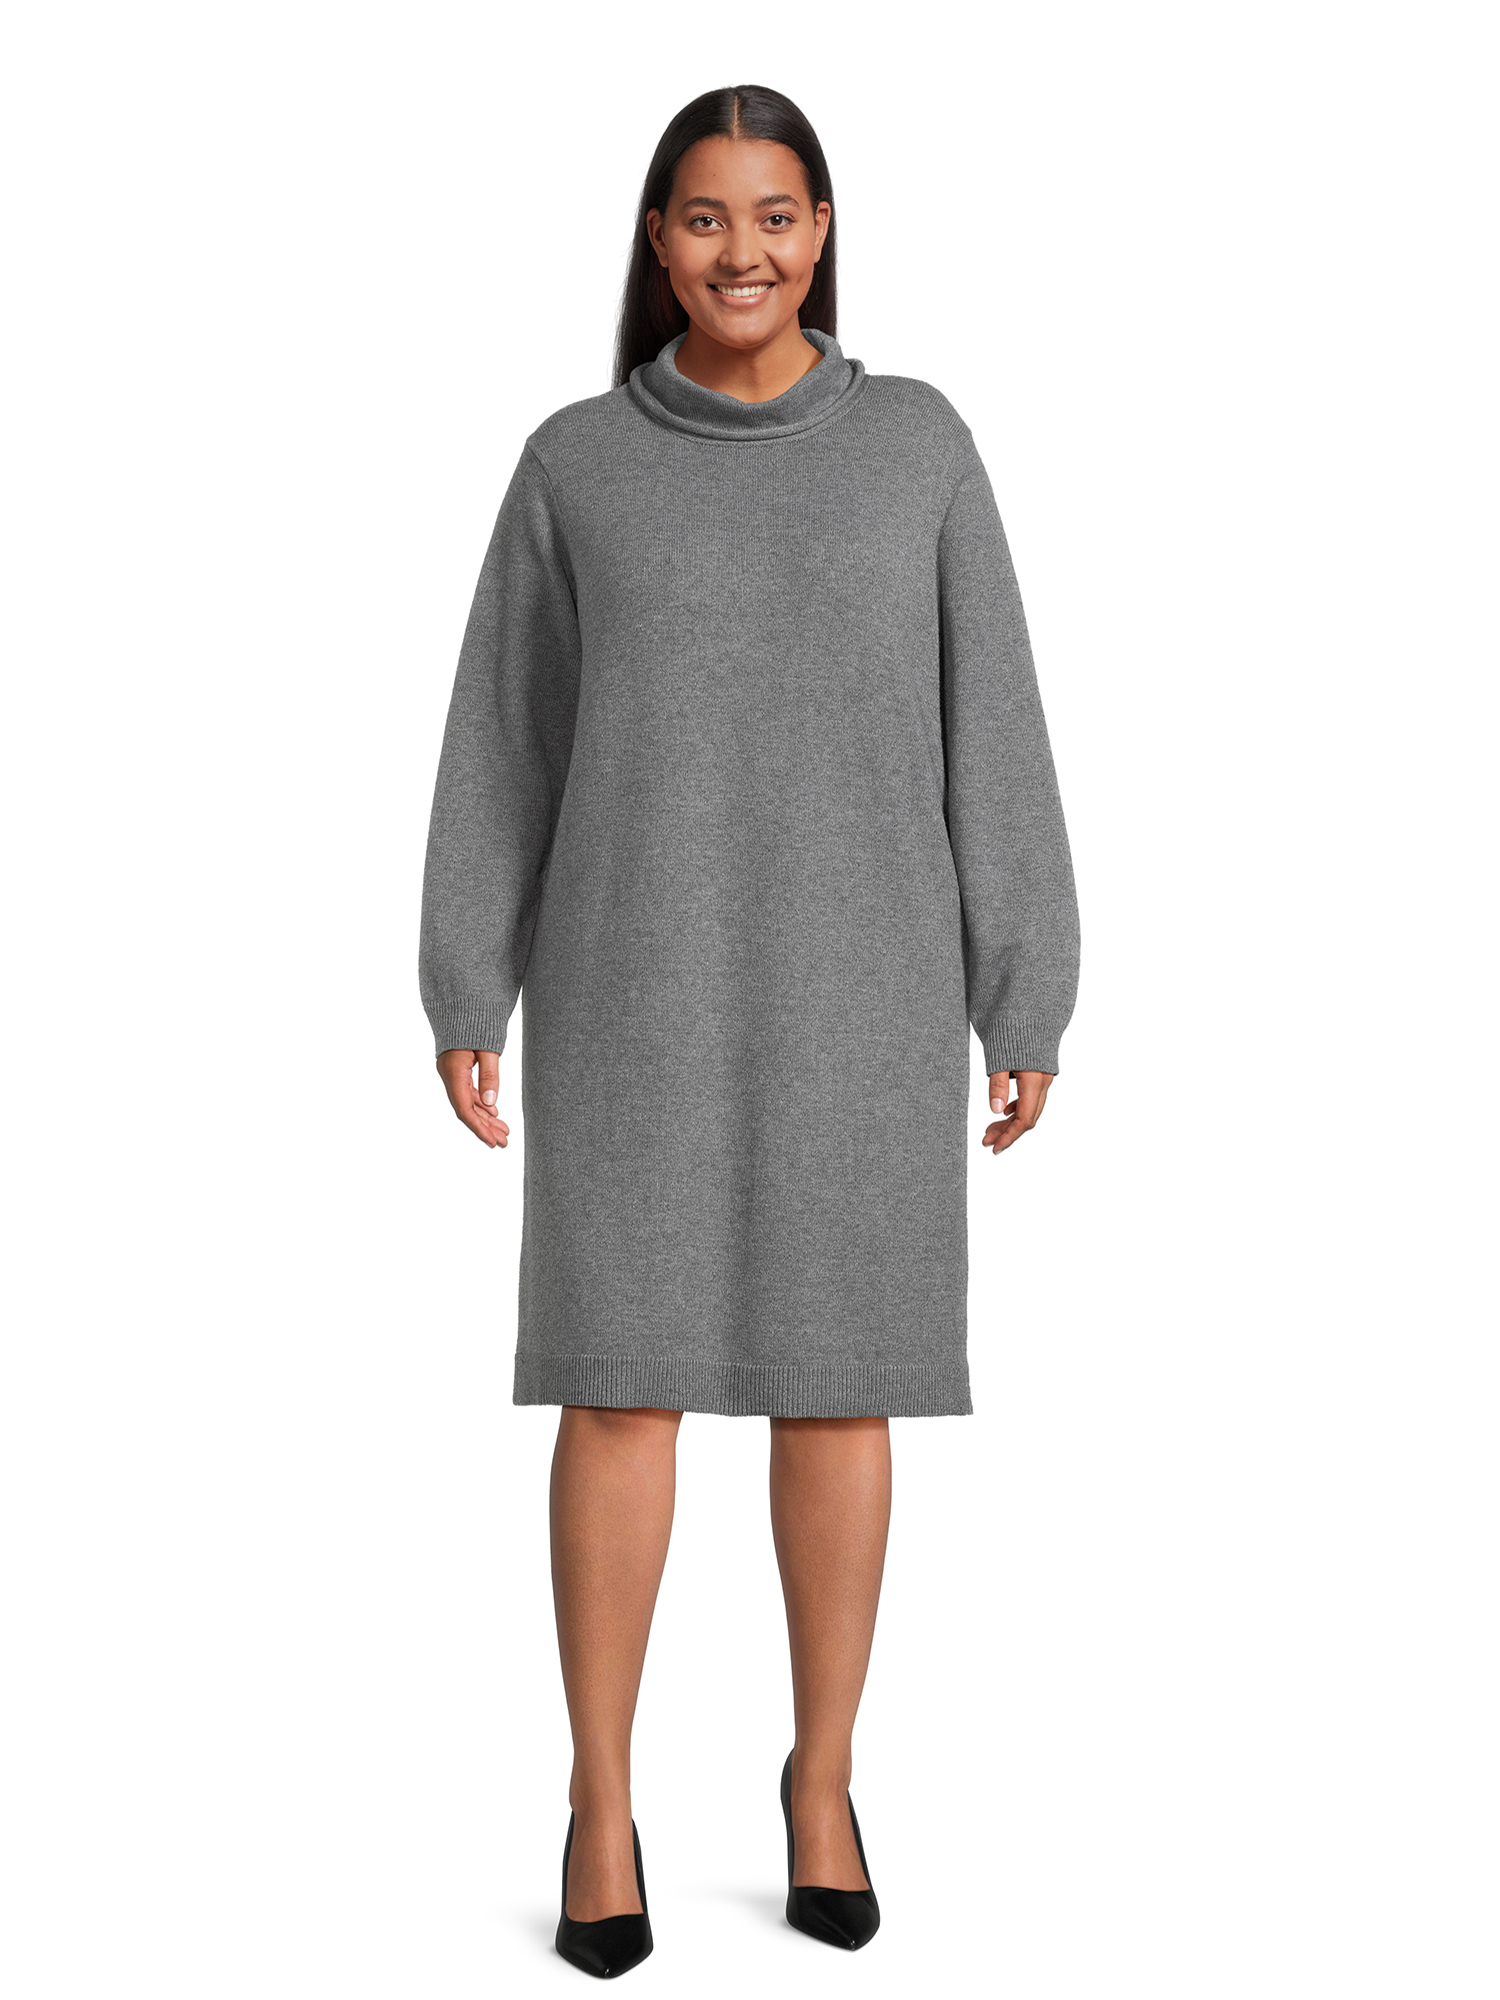 Terra & Sky Women's Plus Size Turtleneck Tunic Length Sweater Dress - image 1 of 5